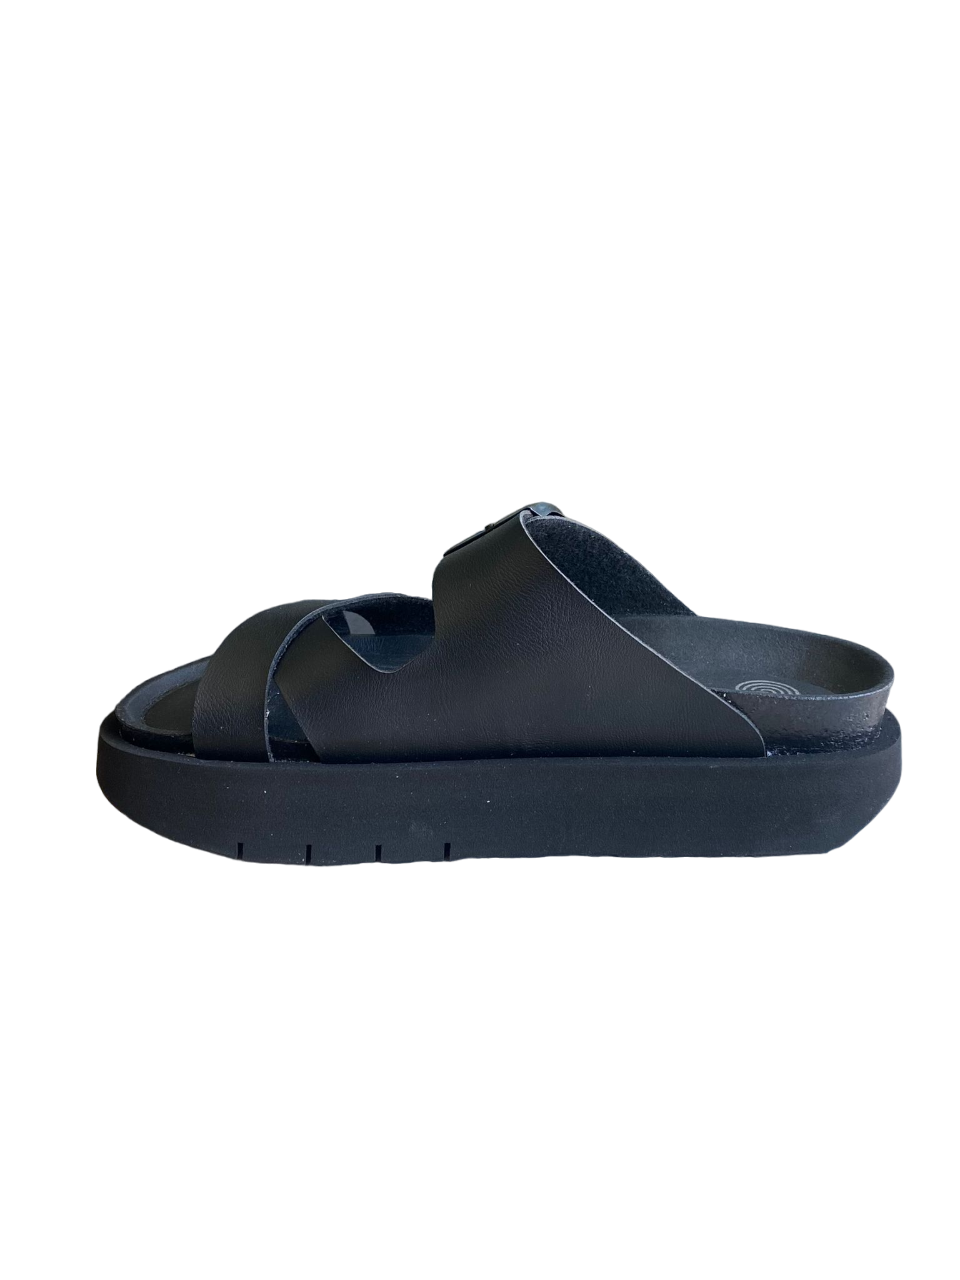 Genuins sandalo da donna Corinna Vegan G104818 black